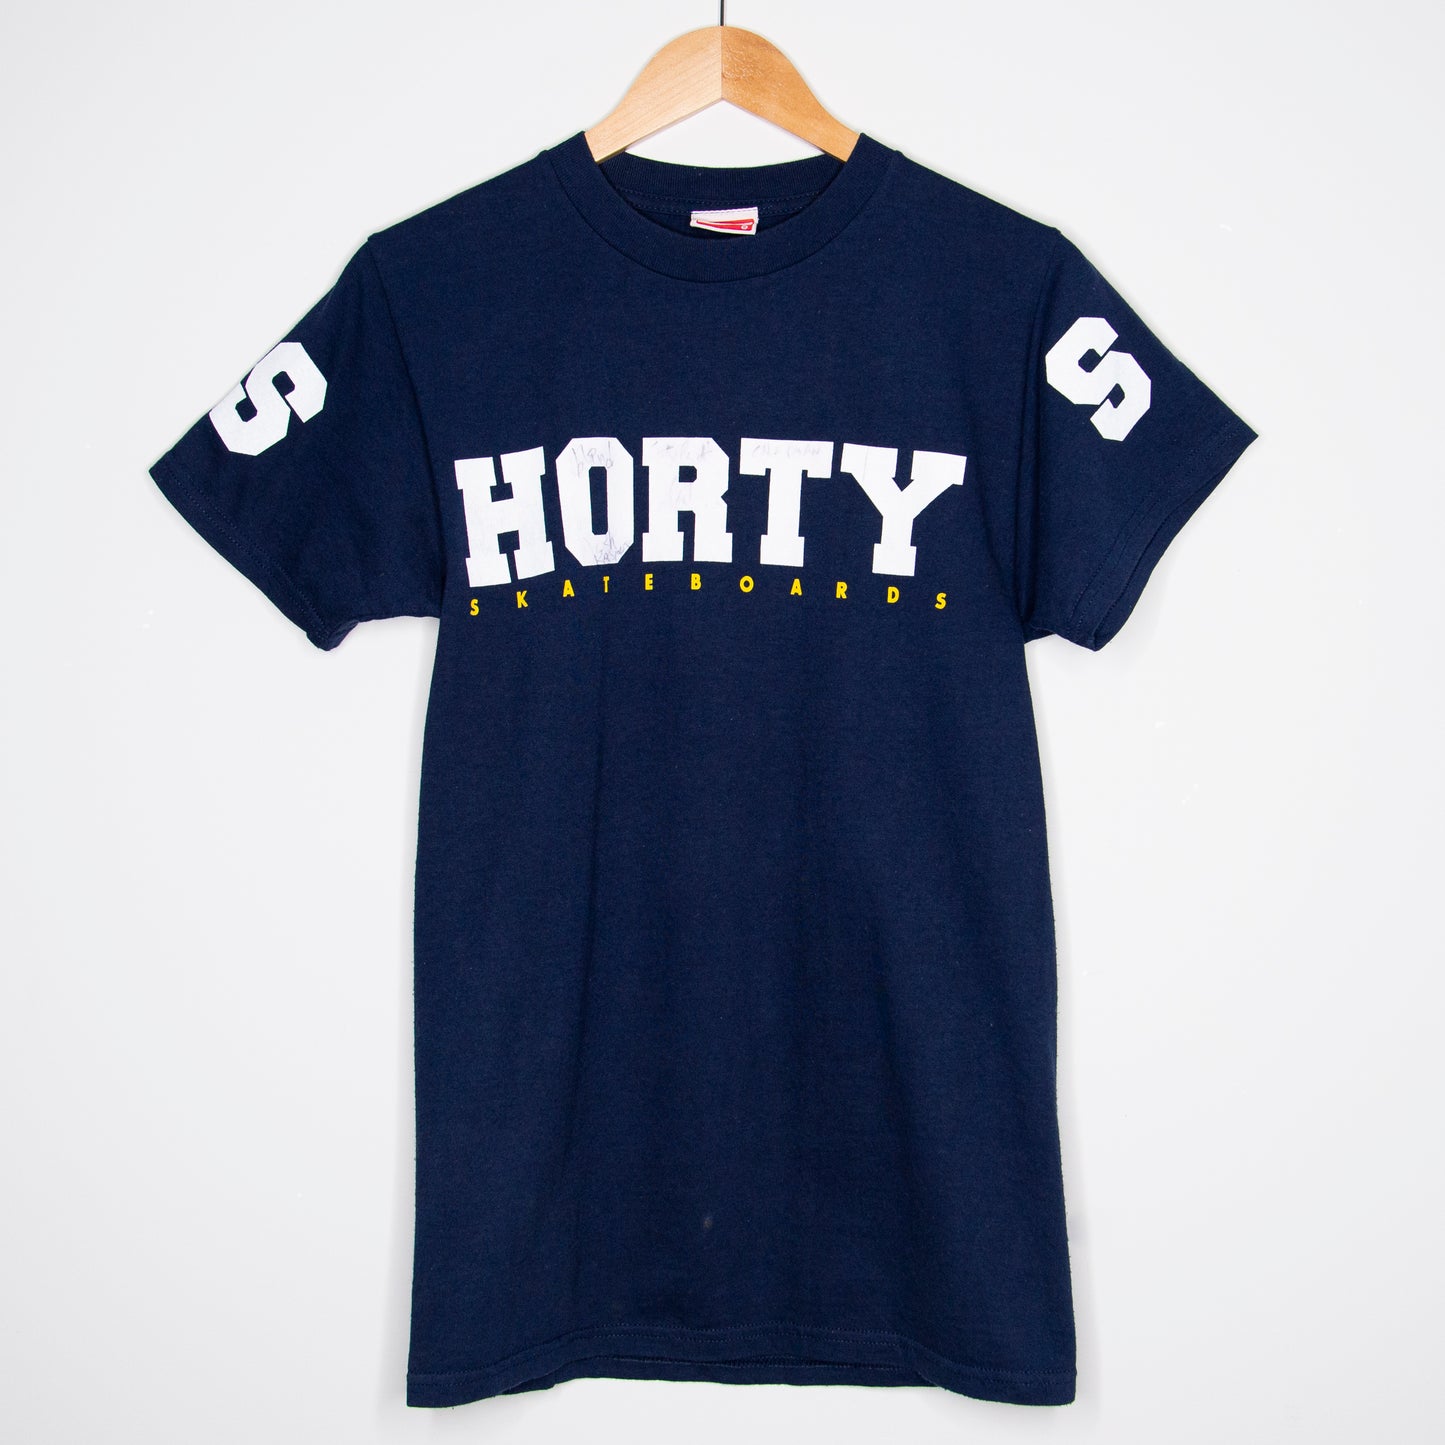 90's Shortys T-Shirt Small